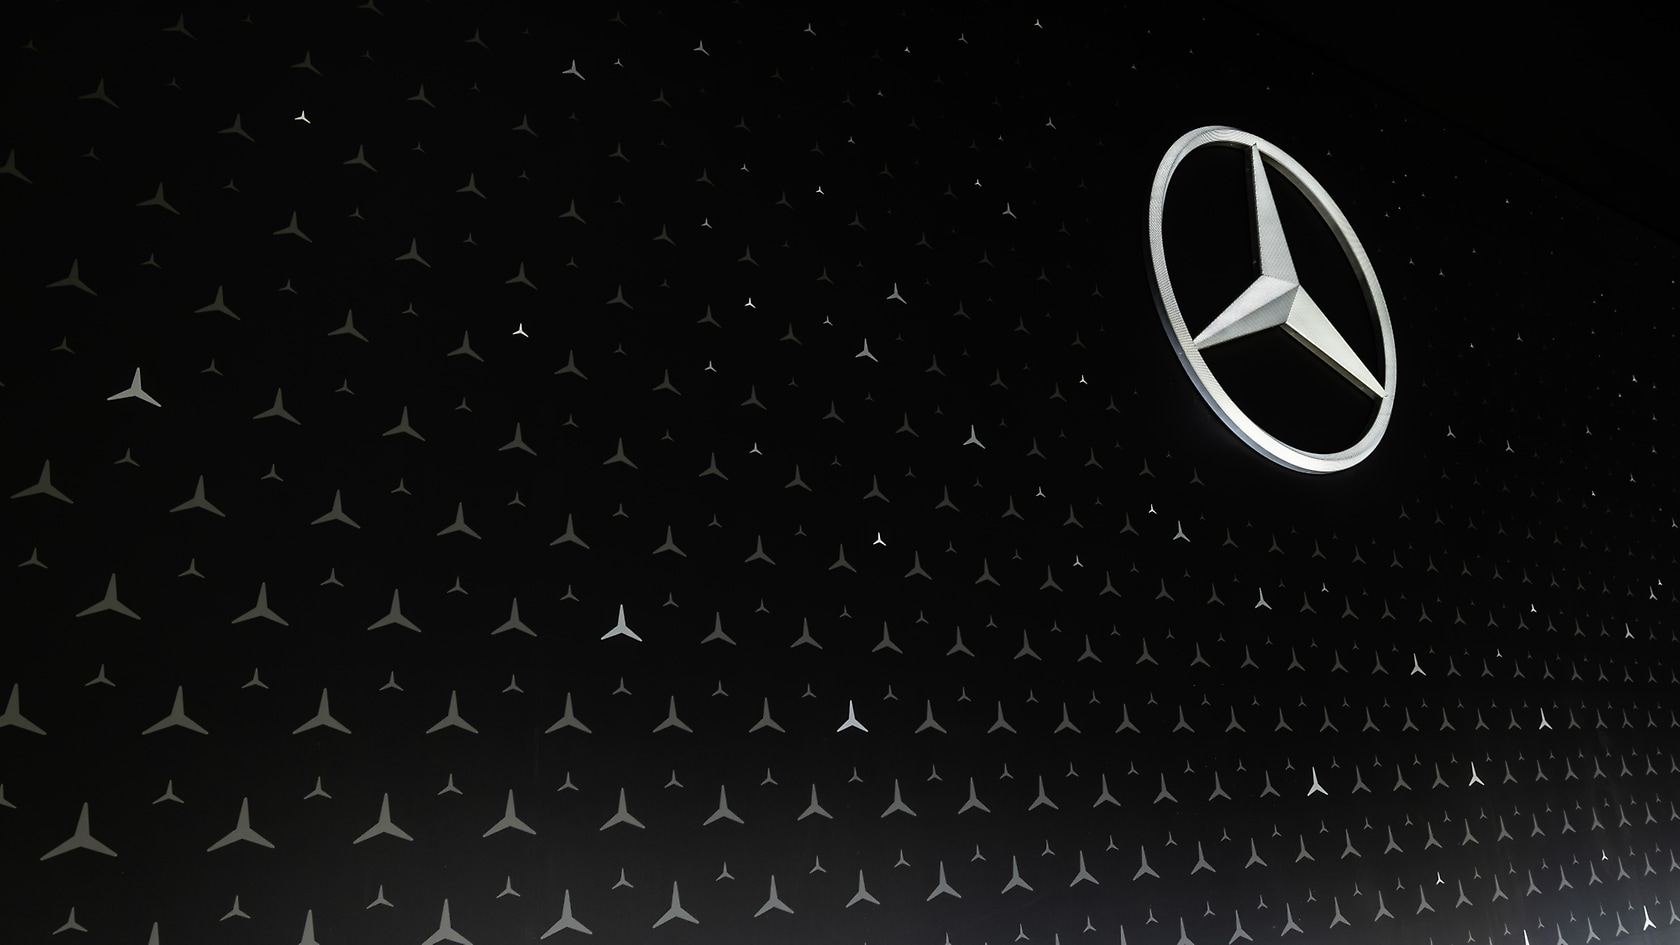 Mercedes-Benz Star.